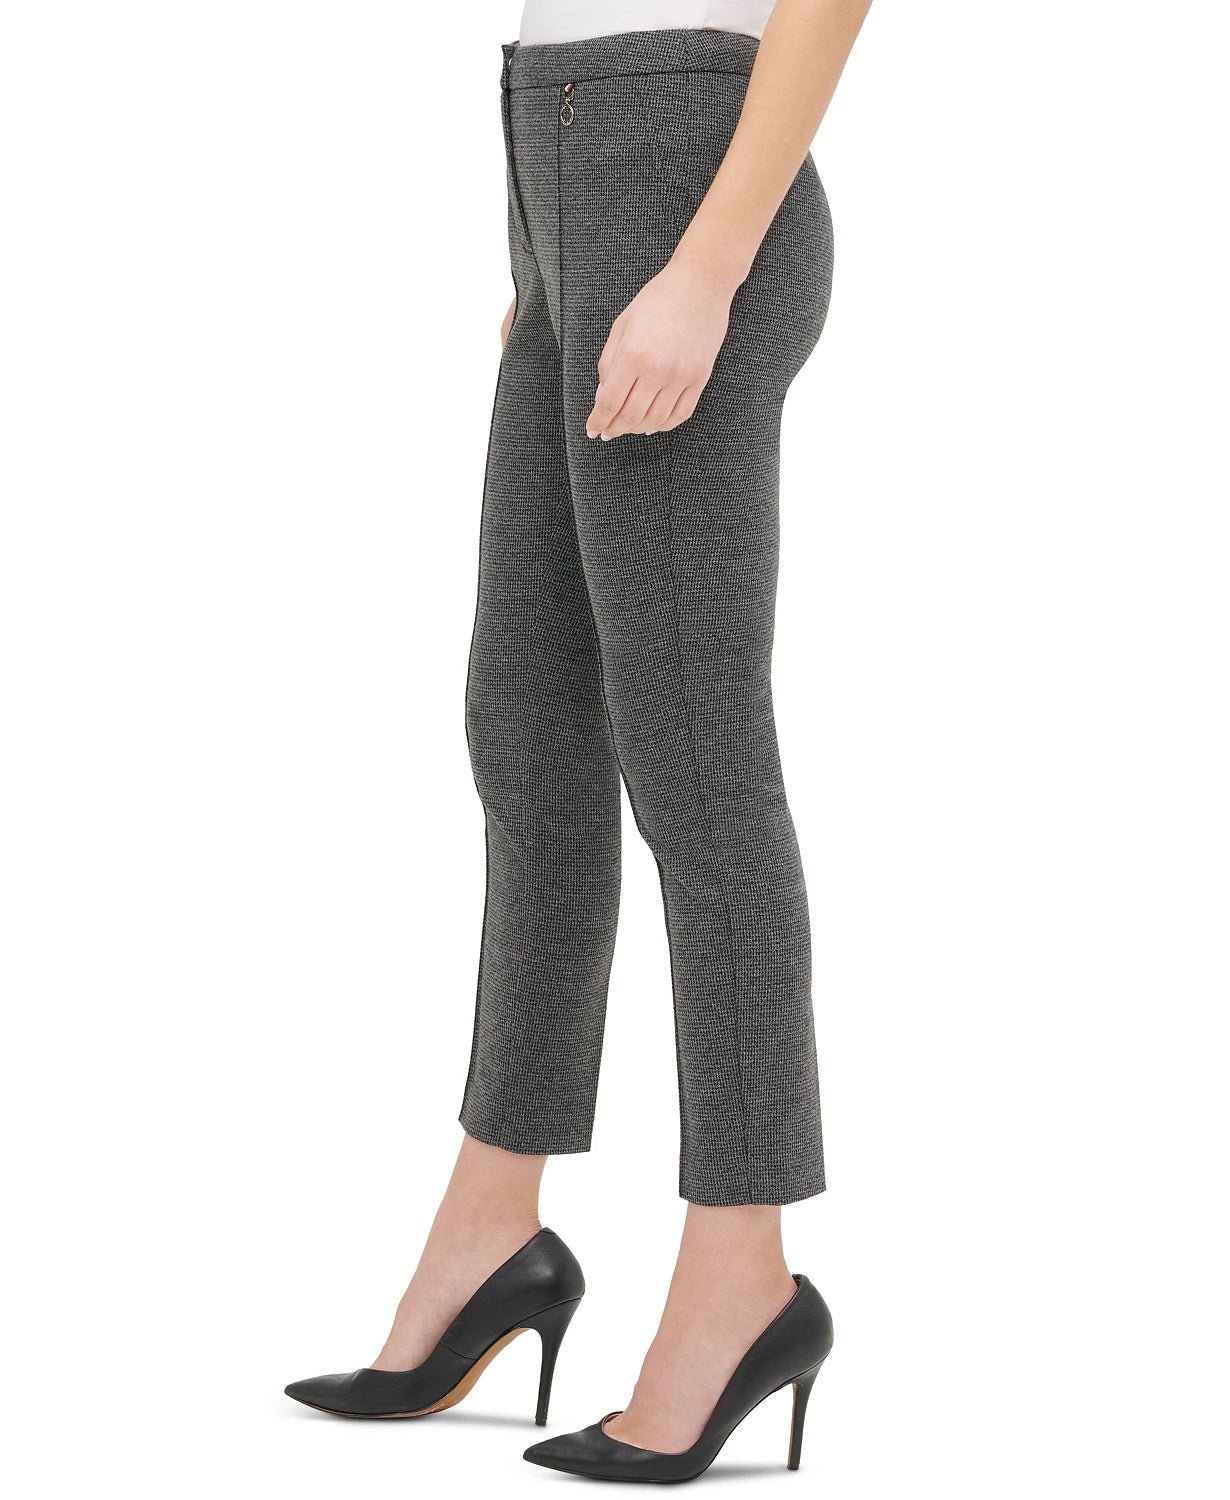 Tommy Hilfiger Women's Skinny Ankle Pants Gray Size 8